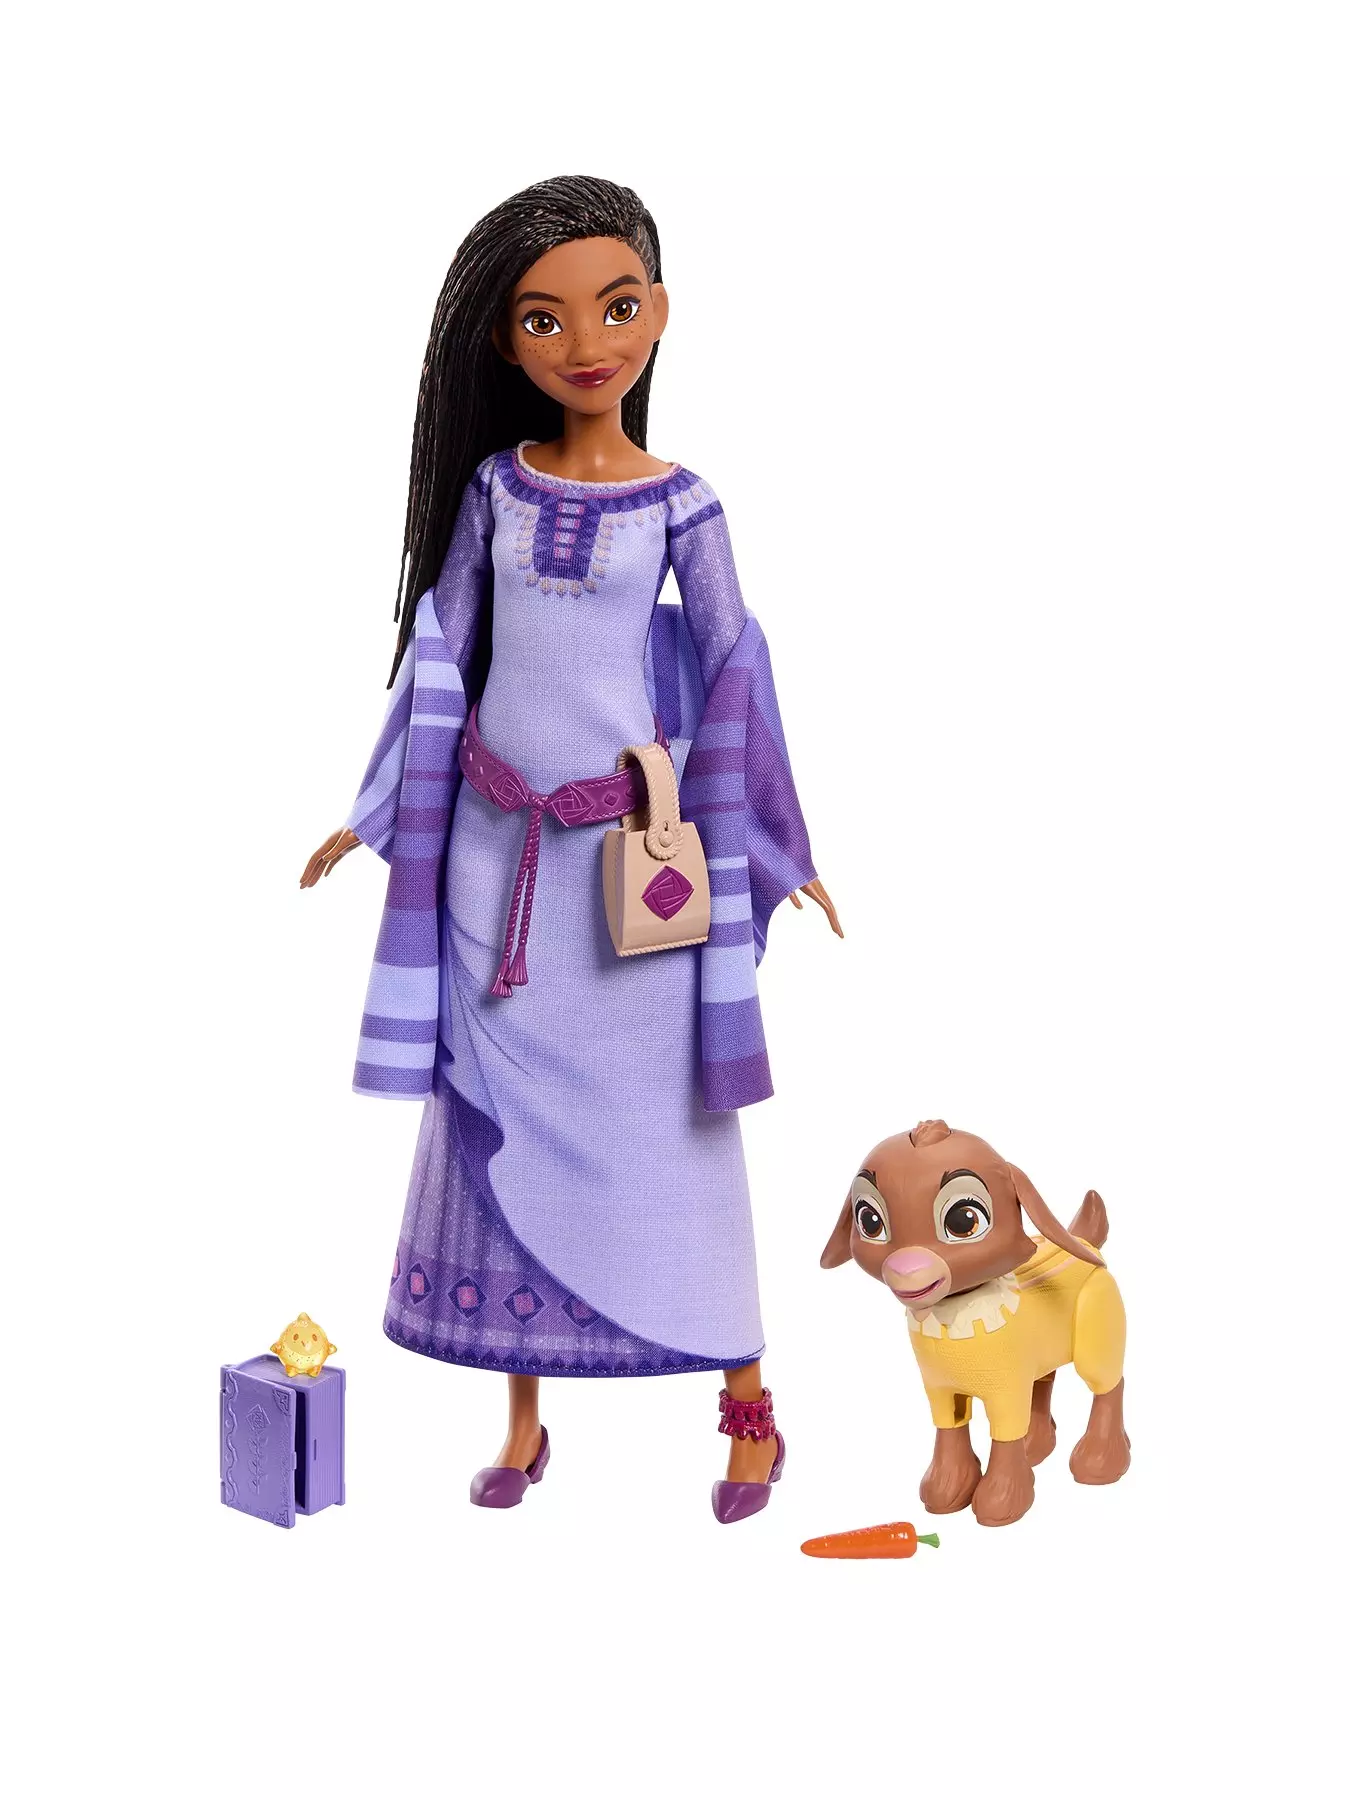 Disney's Wish Asha Dress Authentic Movie Licensed Fashion, Adventure Outfit  Fits Children Sizes 4-6X